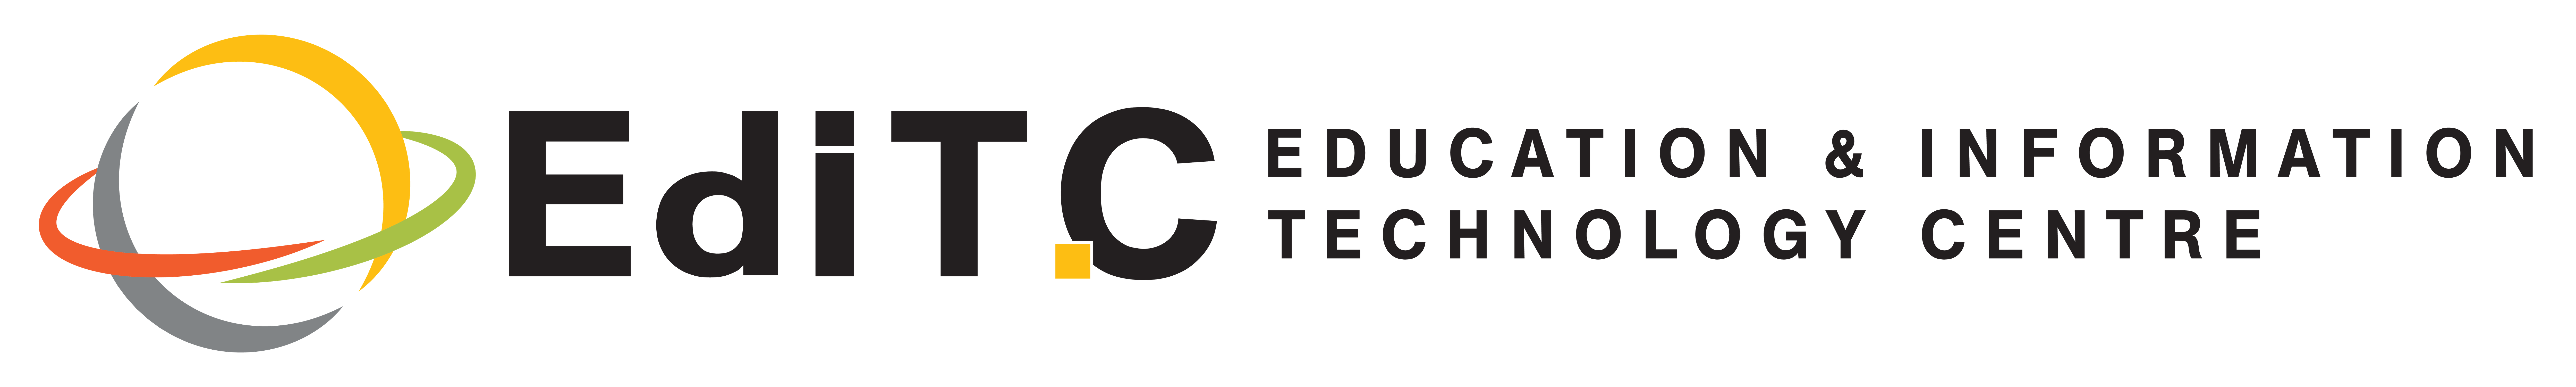 Edit c logo